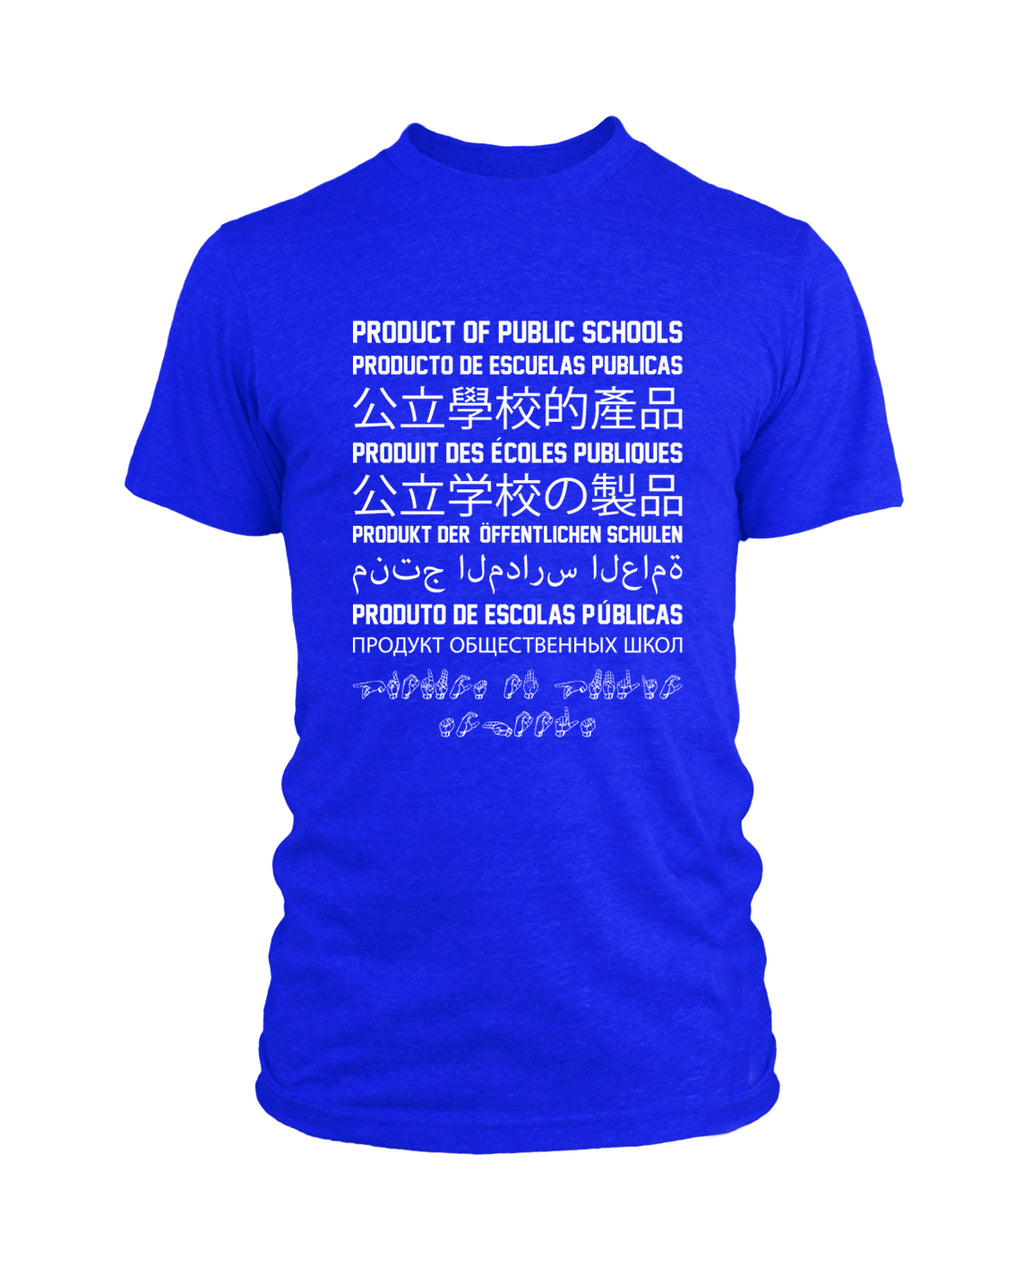 Product of Public Schools - International - Blue - Originalitees